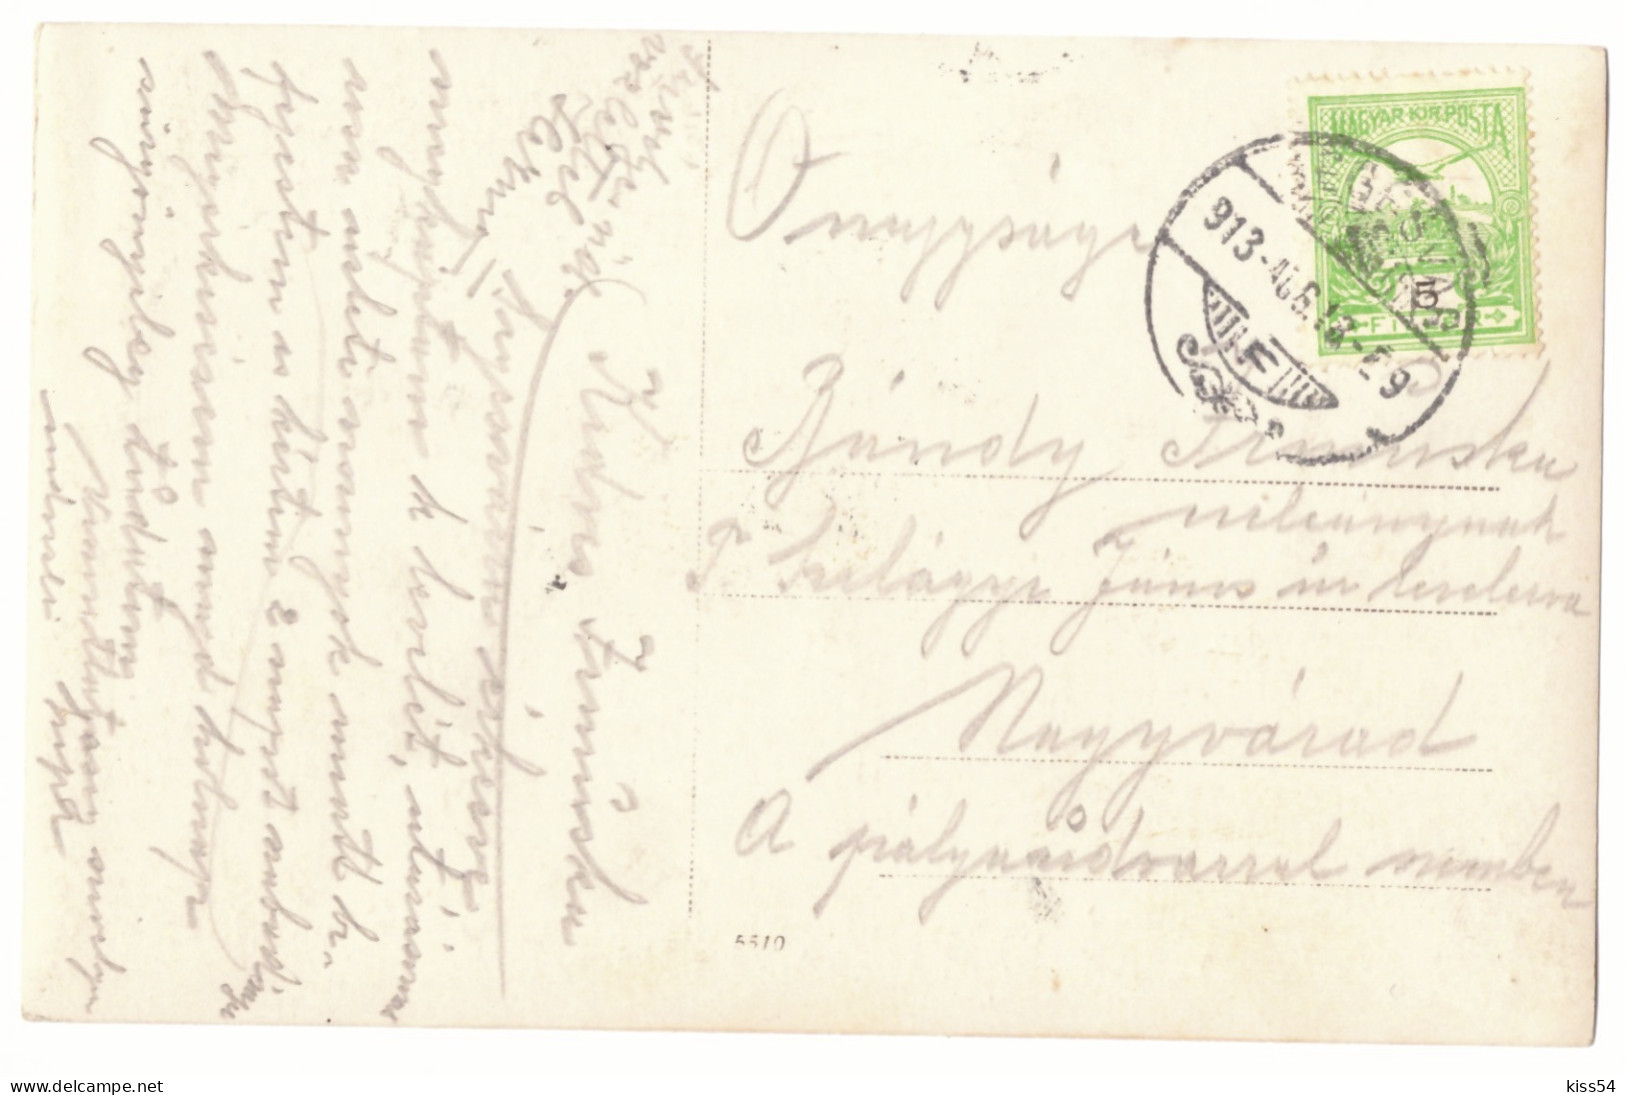 RO 38 - 18226 SIGHISOARA, Mures, Romania - Old Postcard, Real PHOTO - Used - 1913 - Romania